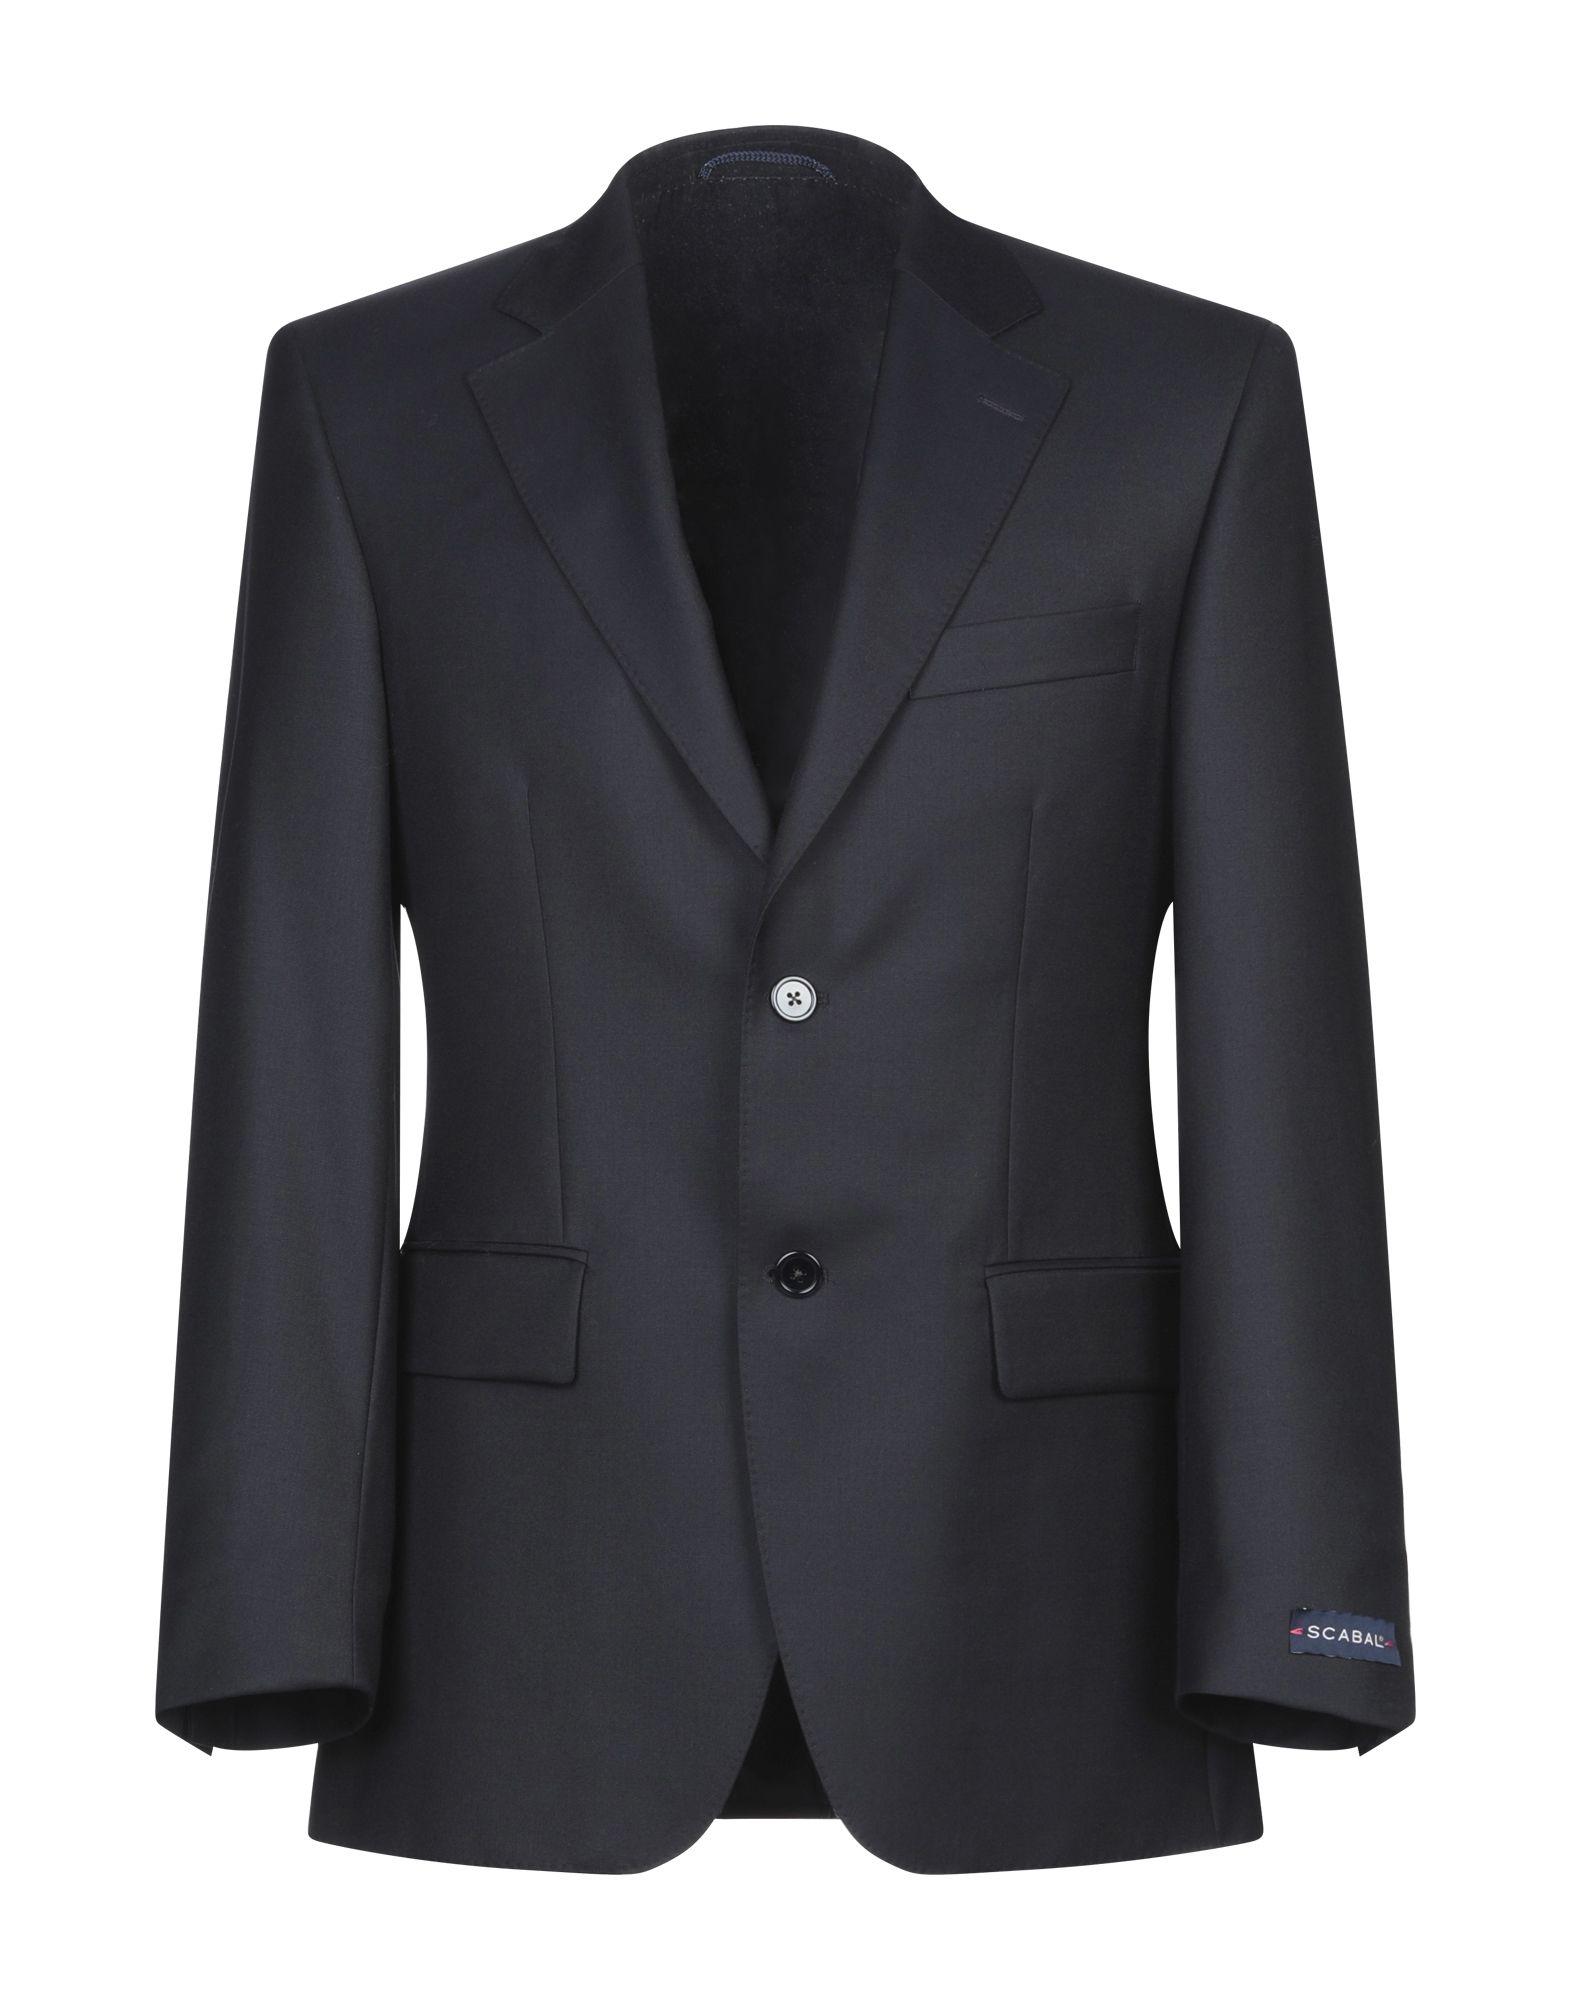 SCABAL® Wool Blazer in Dark Blue (Blue) for Men - Lyst